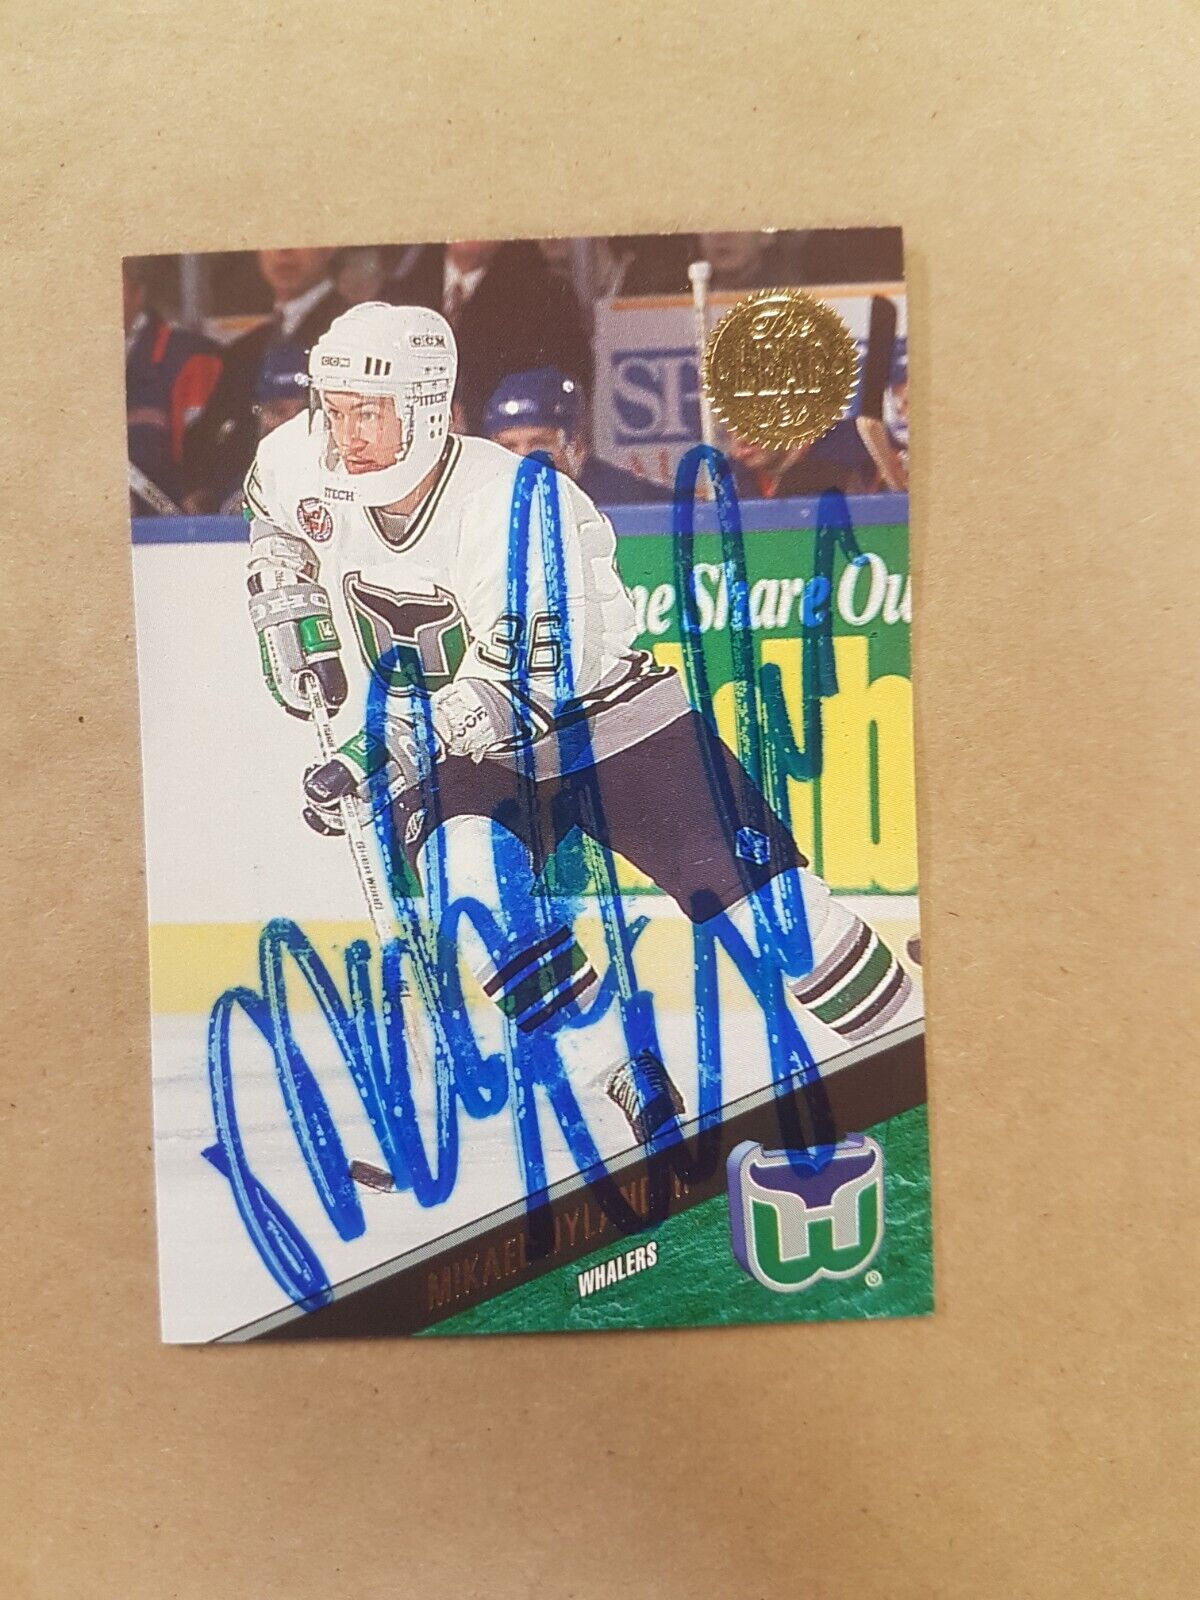 Mikael Nylander Whalers Autograph Card Signed Hockey 1994 leaf 94 rookie